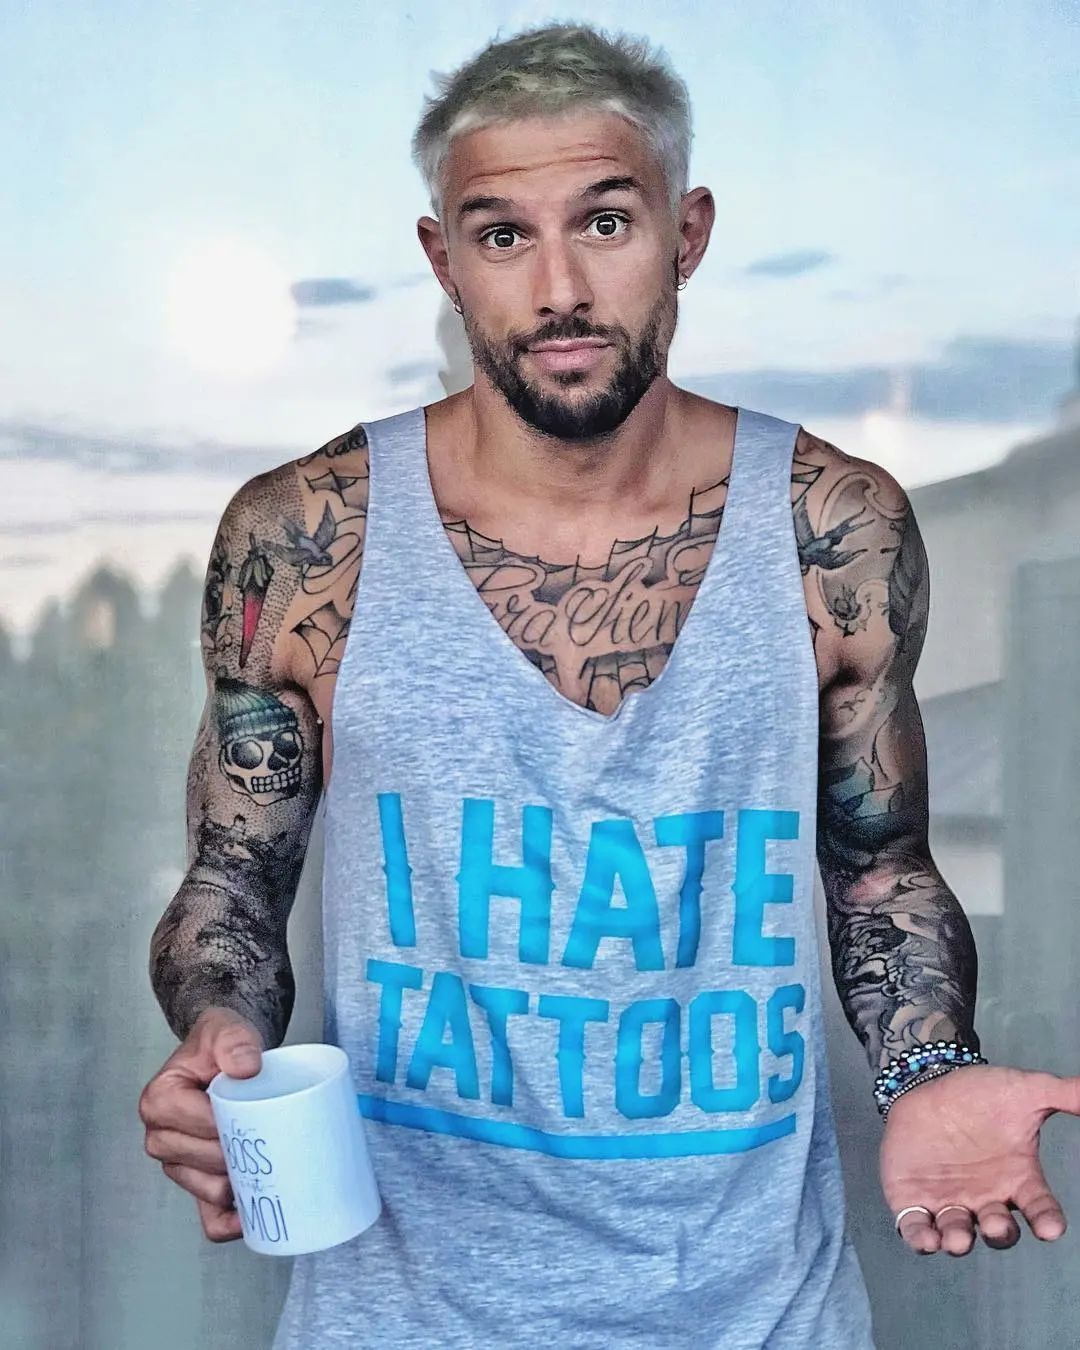 ⚠️ SALDI ⚠️ 
Canotta I HATE TATTOOS: €12,50 

➡️ Canotta oversize grigia con stampa serigrafica frontale I HATE TATTOOS.
📌Vestibilità ampia 
Made in Italy 
.
.
.
.
.
.
.
#ioodioitatuaggi
#tattooedpeople
#ihatetattoos #tattooitaly #tattooitalia #tattoomilano #tattooedboysandgirls #tattooideasforguys #inkedguys #tatuaggio #iltatuaggiomag #tattoolifecommunity #tattoolifemagazine #tattoosociety #sconto #pe2022 #supersconti #oversizecoat #italianbrand #streetwearoutfit #streetweardaily #urbanstyle #urbanclothing #basketballplayers #instatatuaggi #tattoooftheday #tattoos_of_instagram #italianboy #boywithstyle #inkedguys #tatuagem